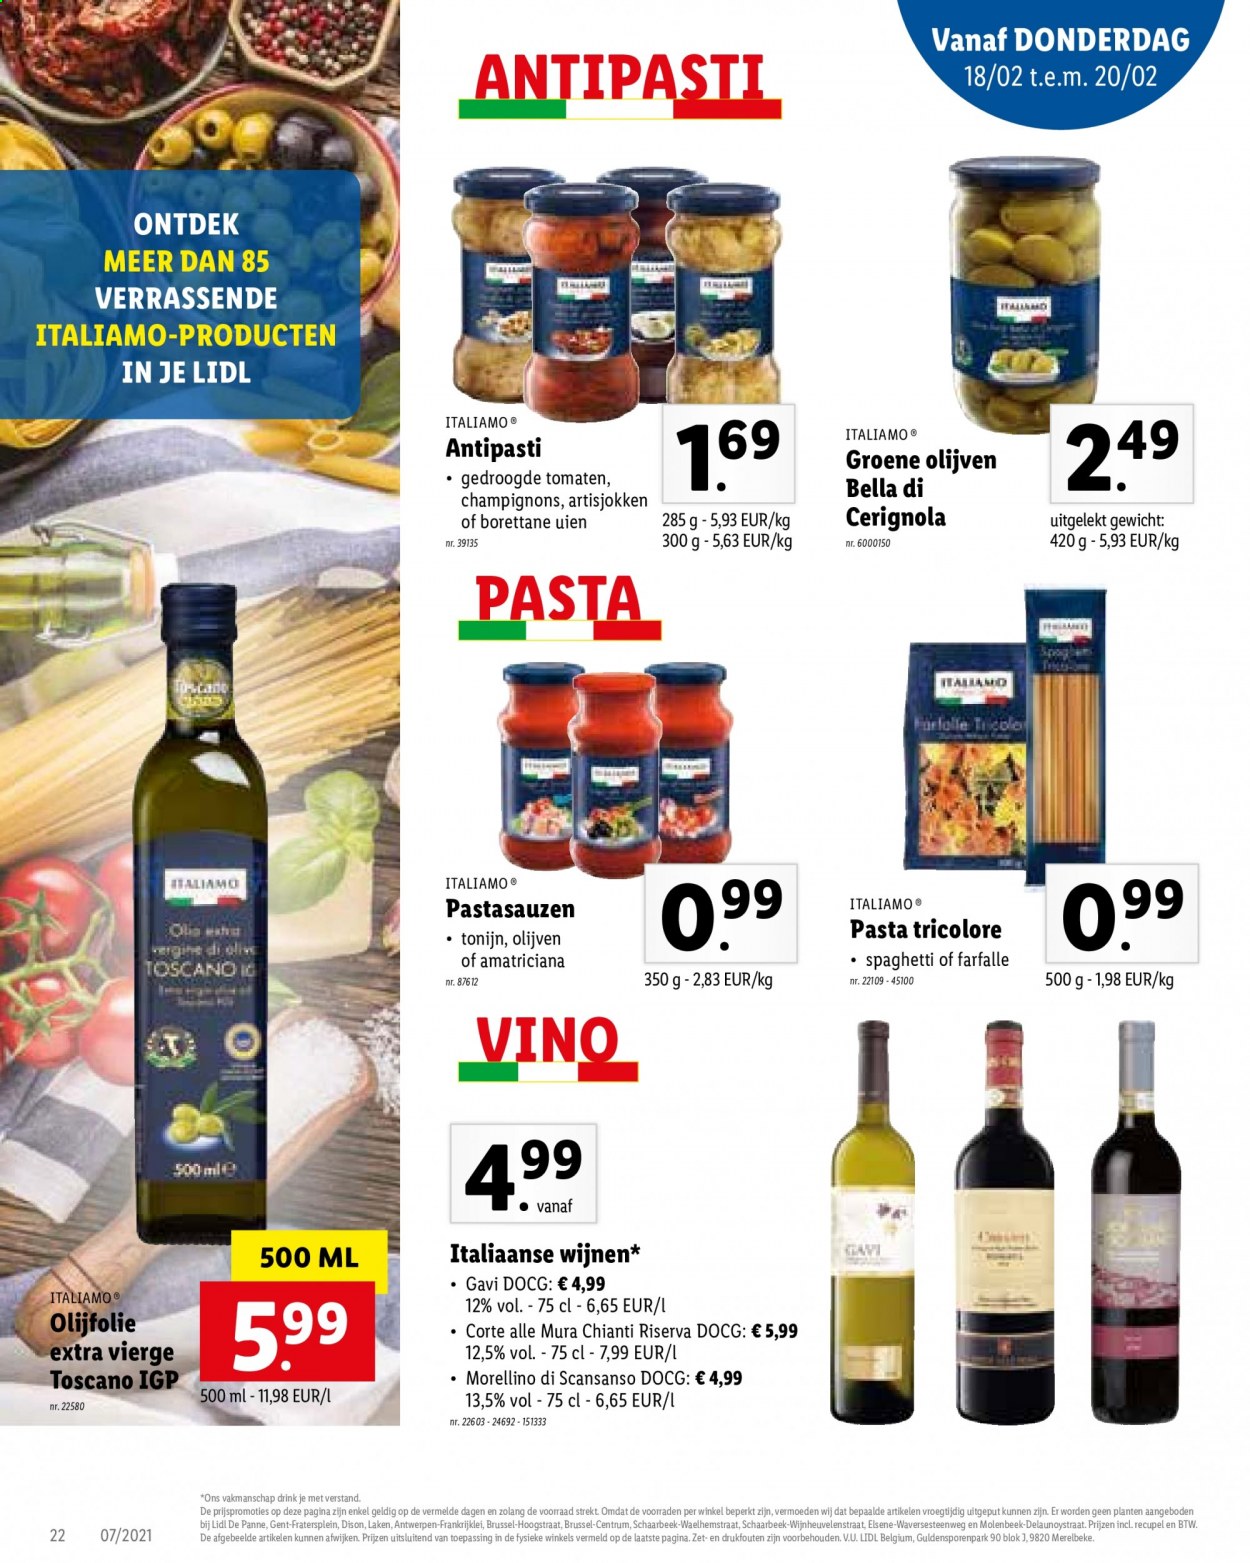 thumbnail - Lidl-aanbieding - 15/02/2021 - 20/02/2021 -  producten in de aanbieding - antipasti, Chianti, pasta, spaghetti, tonijn, olijfolie, olijven, groene olijven, farfalle. Pagina 22.